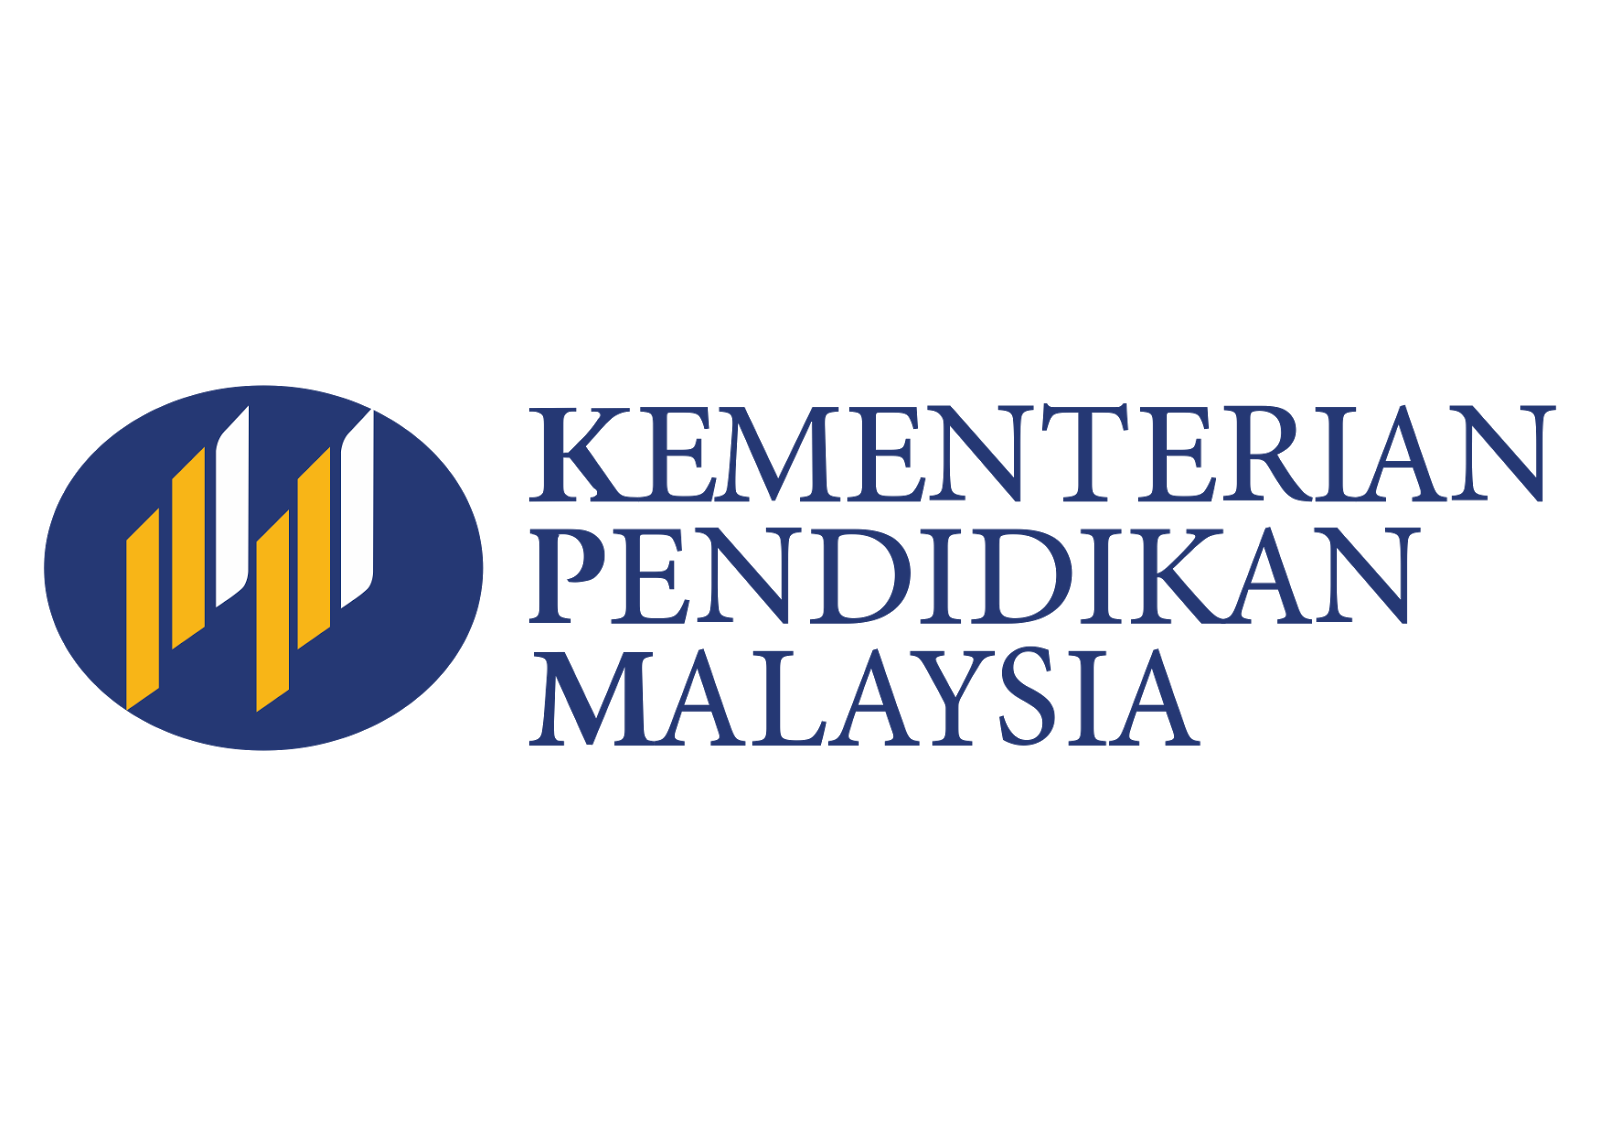 Kementerian pendidikan malaysia Logo Vector ~ Format Cdr ...